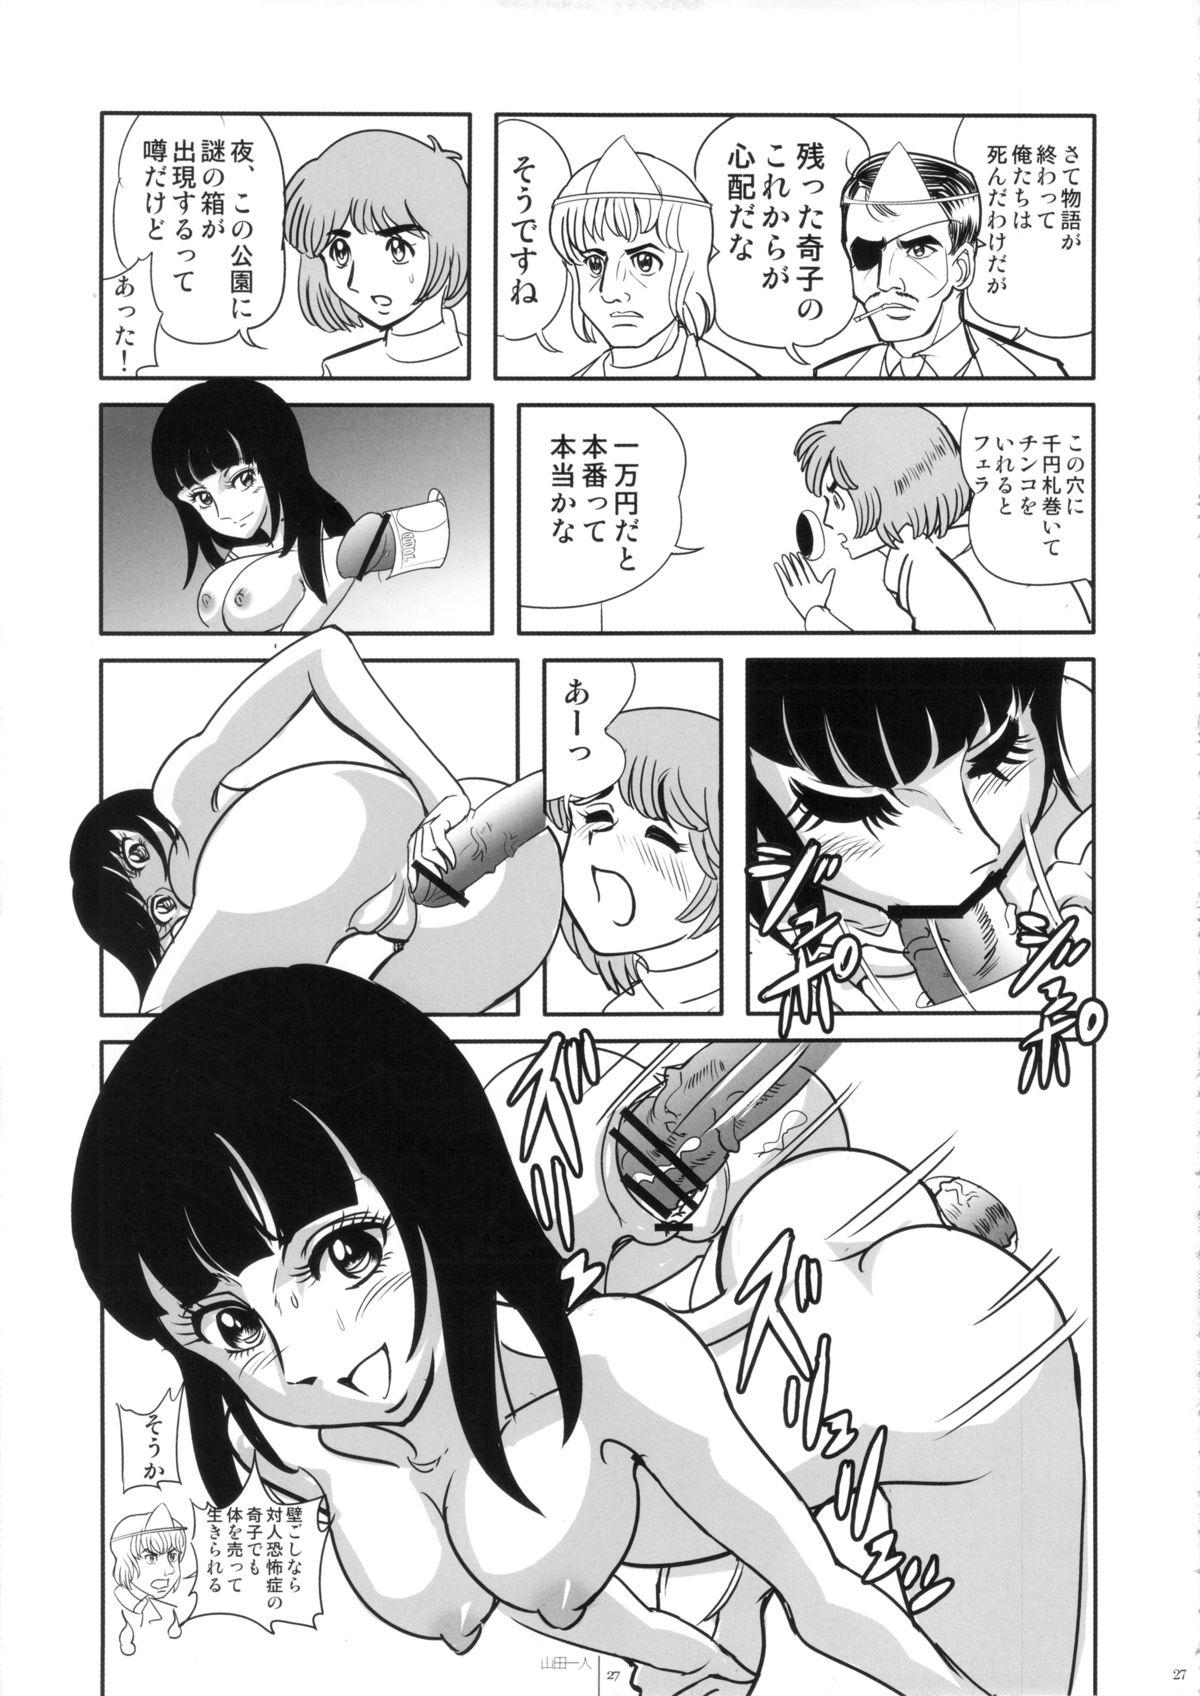 FLOUR2 Tezuka Manga Graffiti 26